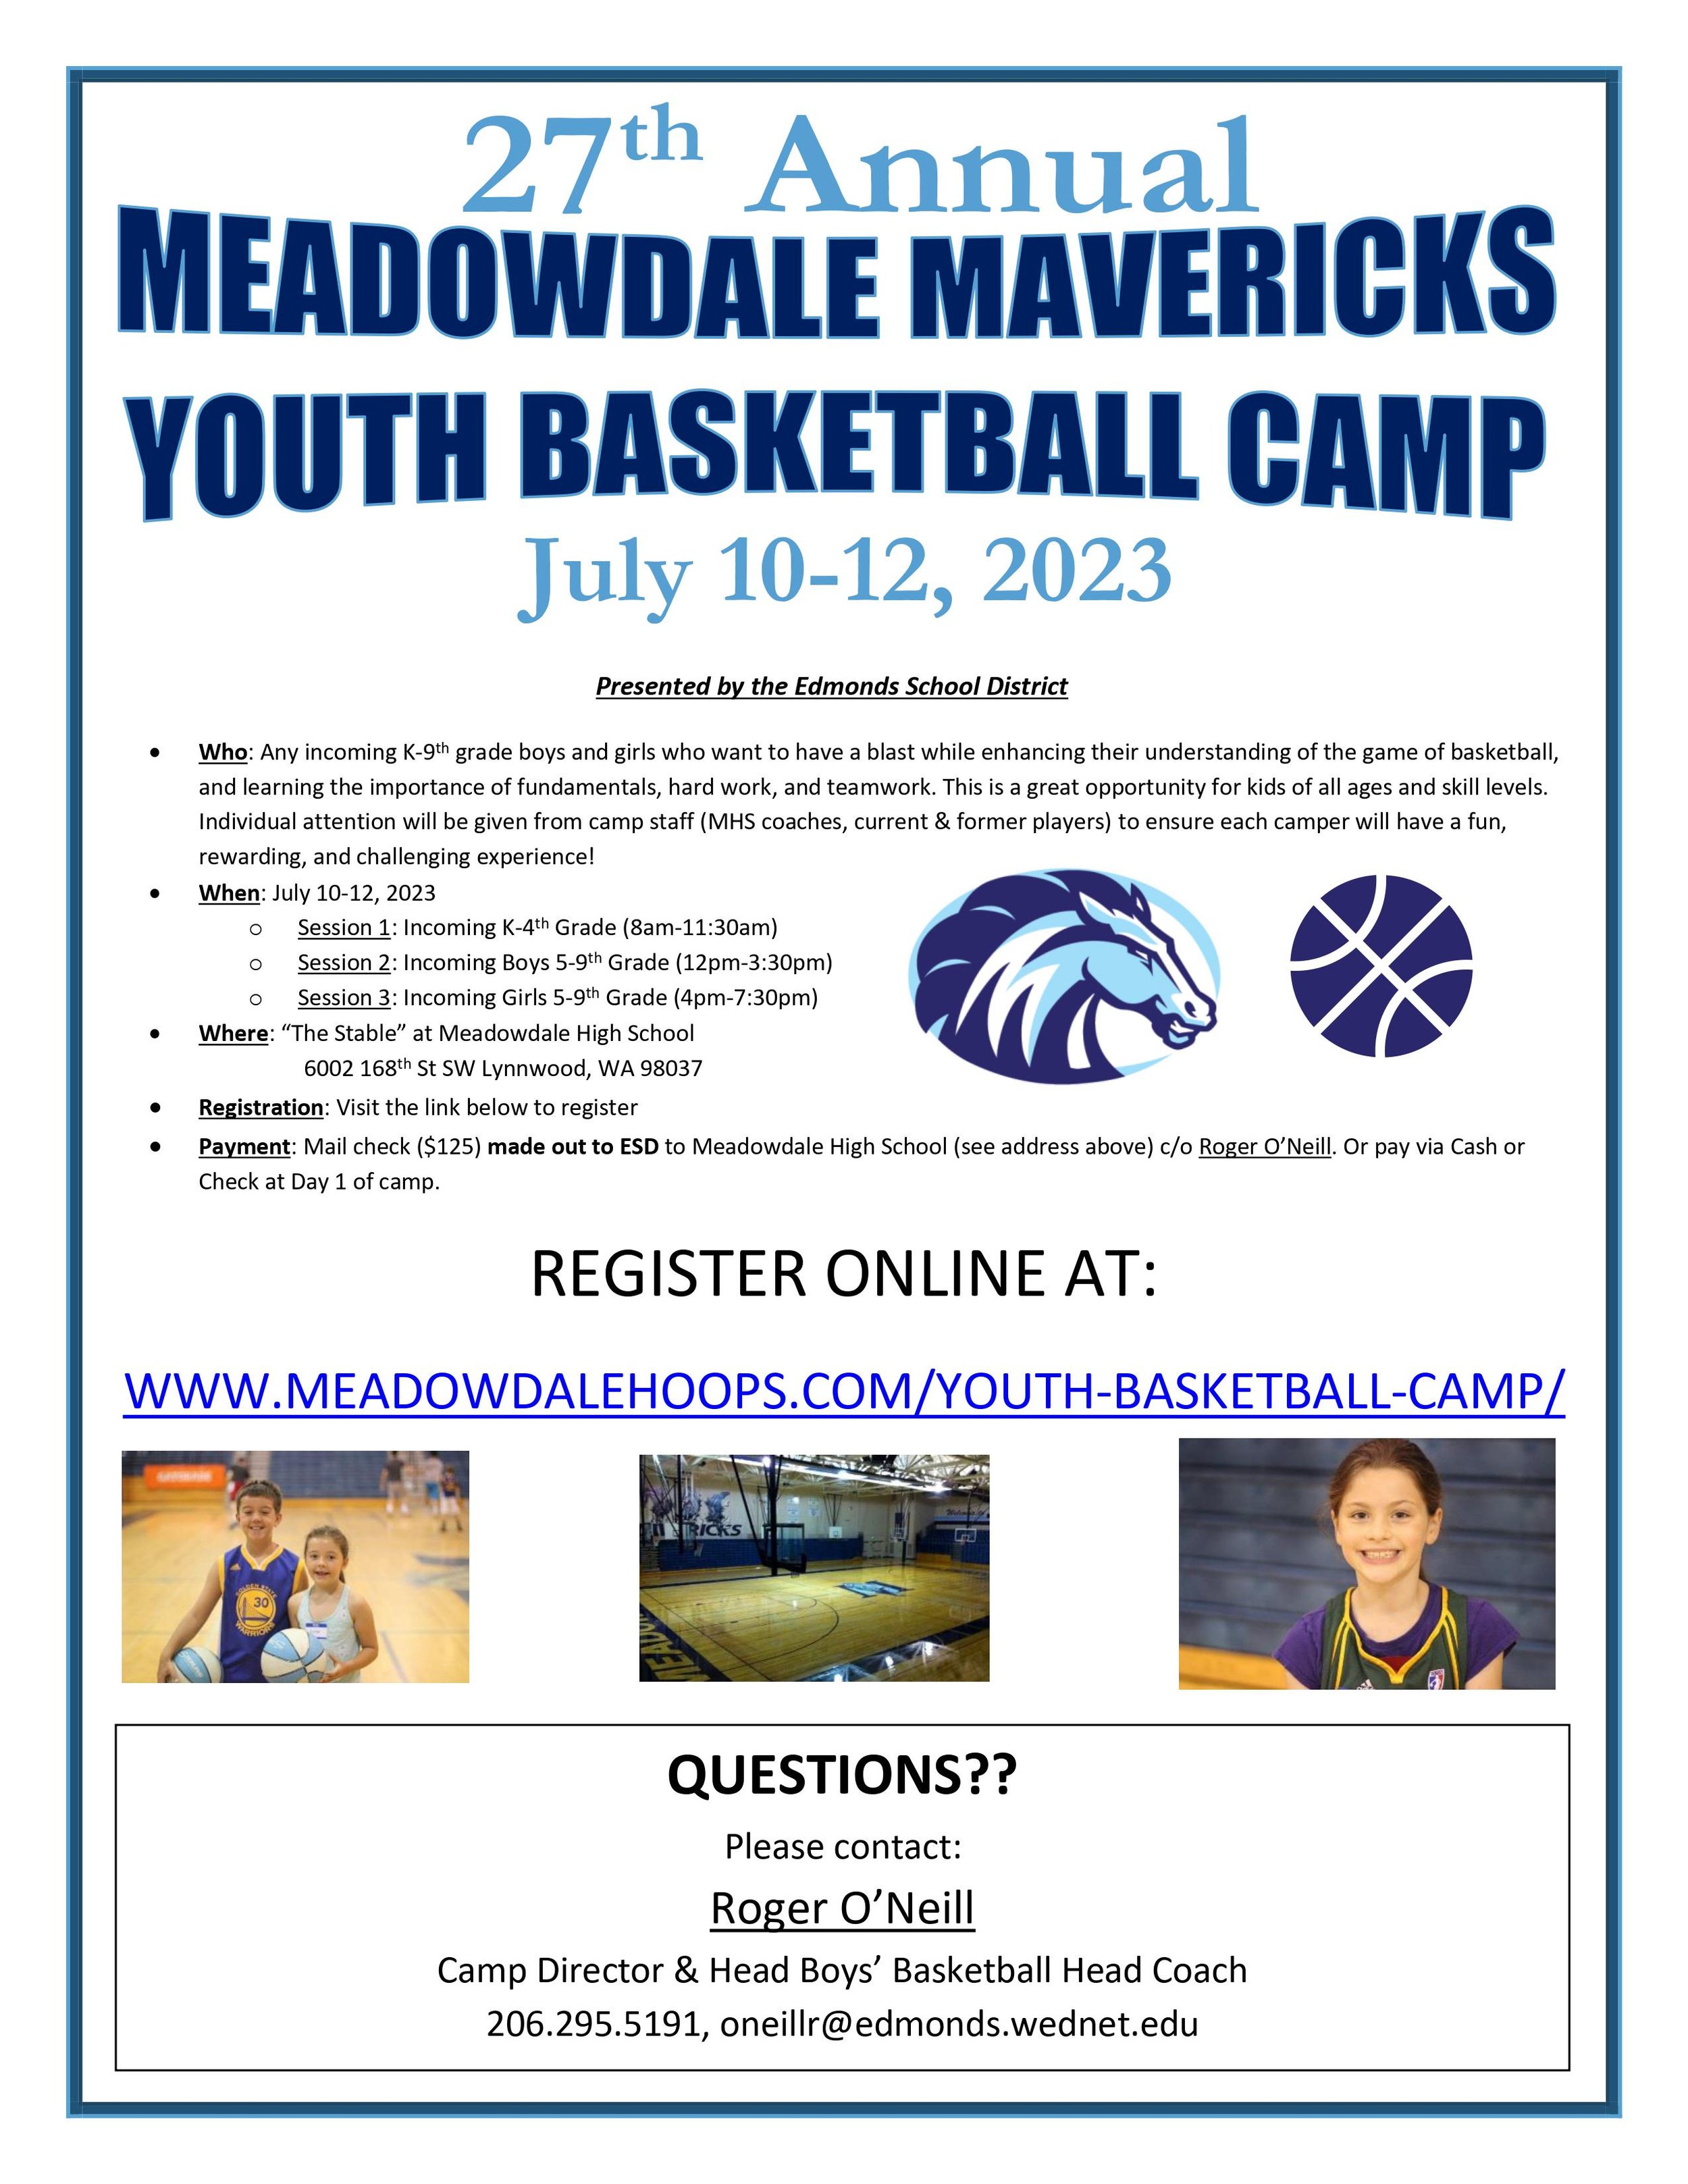 Youth Basketball Camp — Meadowdale Basketball